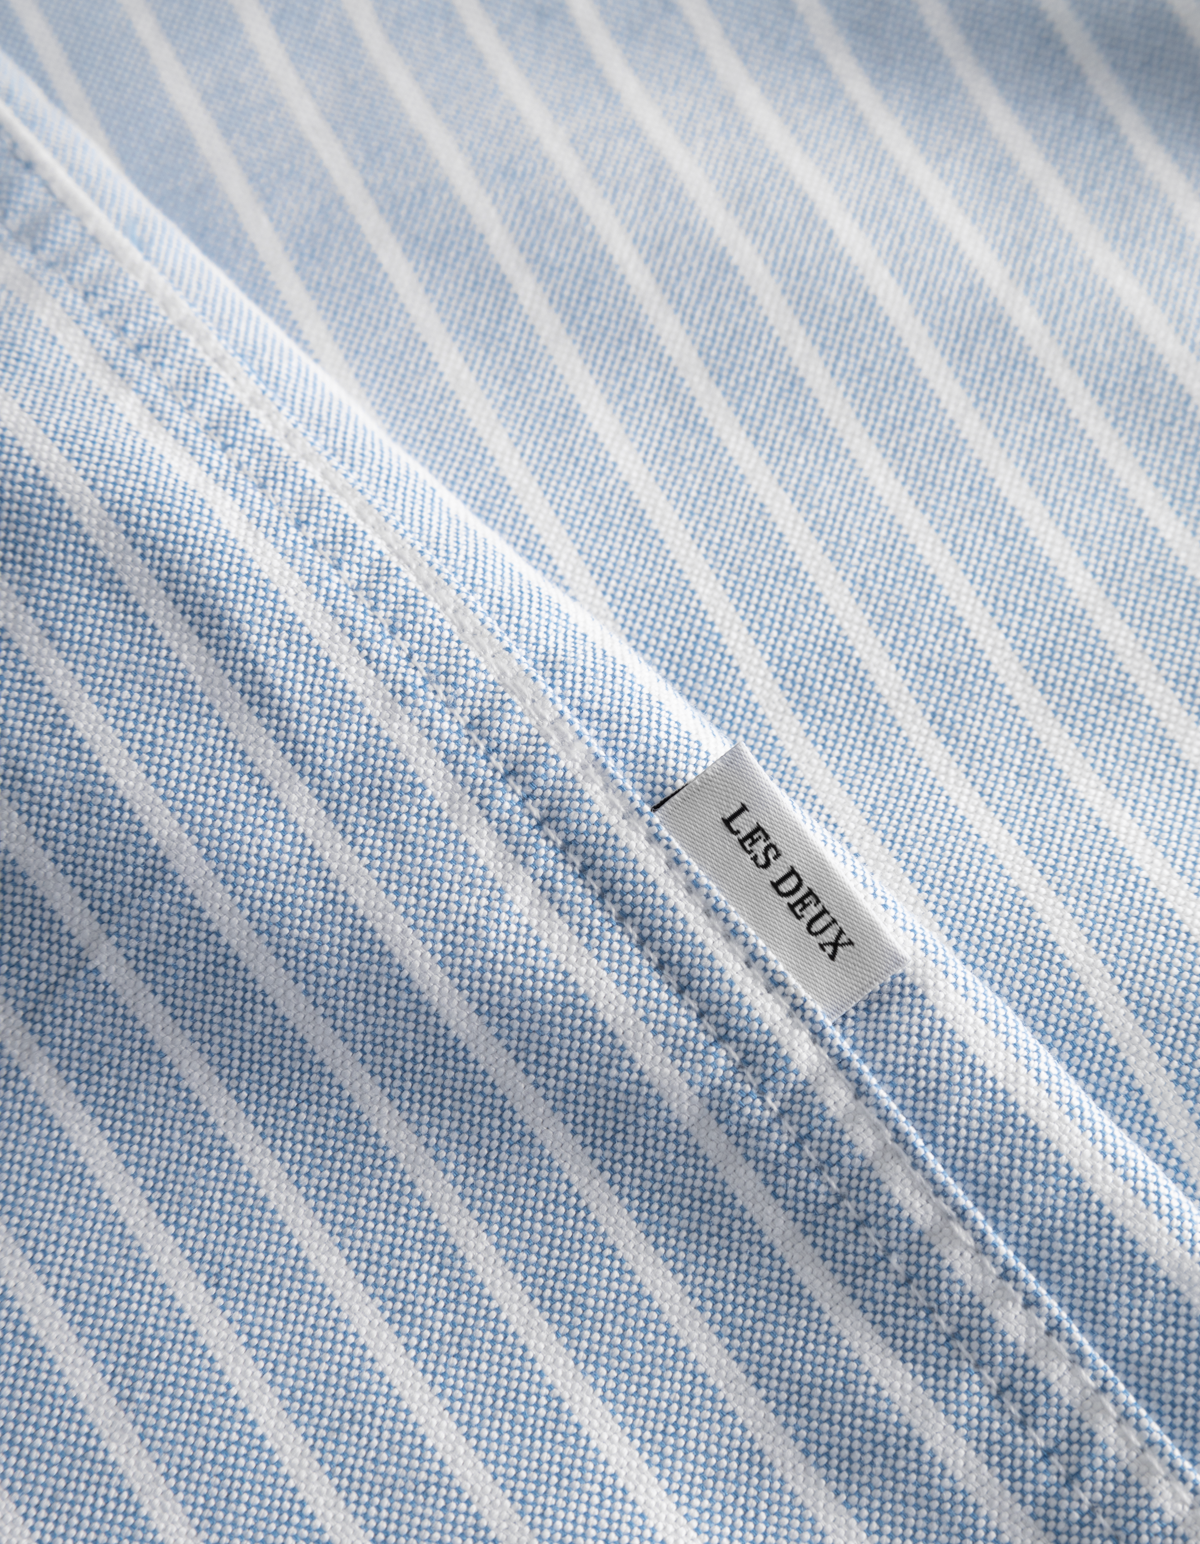 Kristian Oxford Shirt - Stripes Light Blue/White